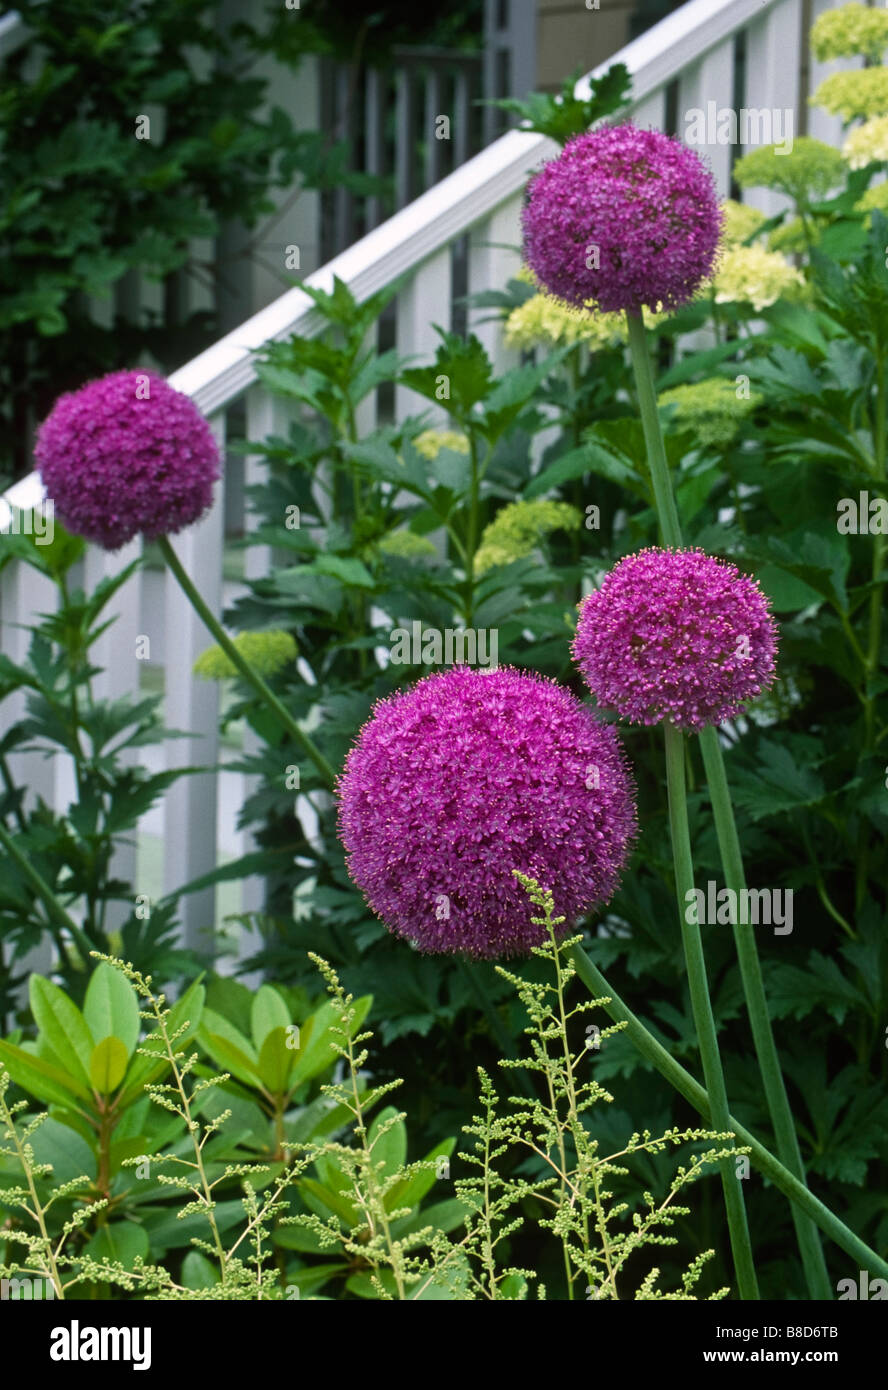 Riesigen dekorativen Zwiebeln erheben sich über andere Pflanzen in diesem Dooryard Garten Anfang Juni. Stockfoto